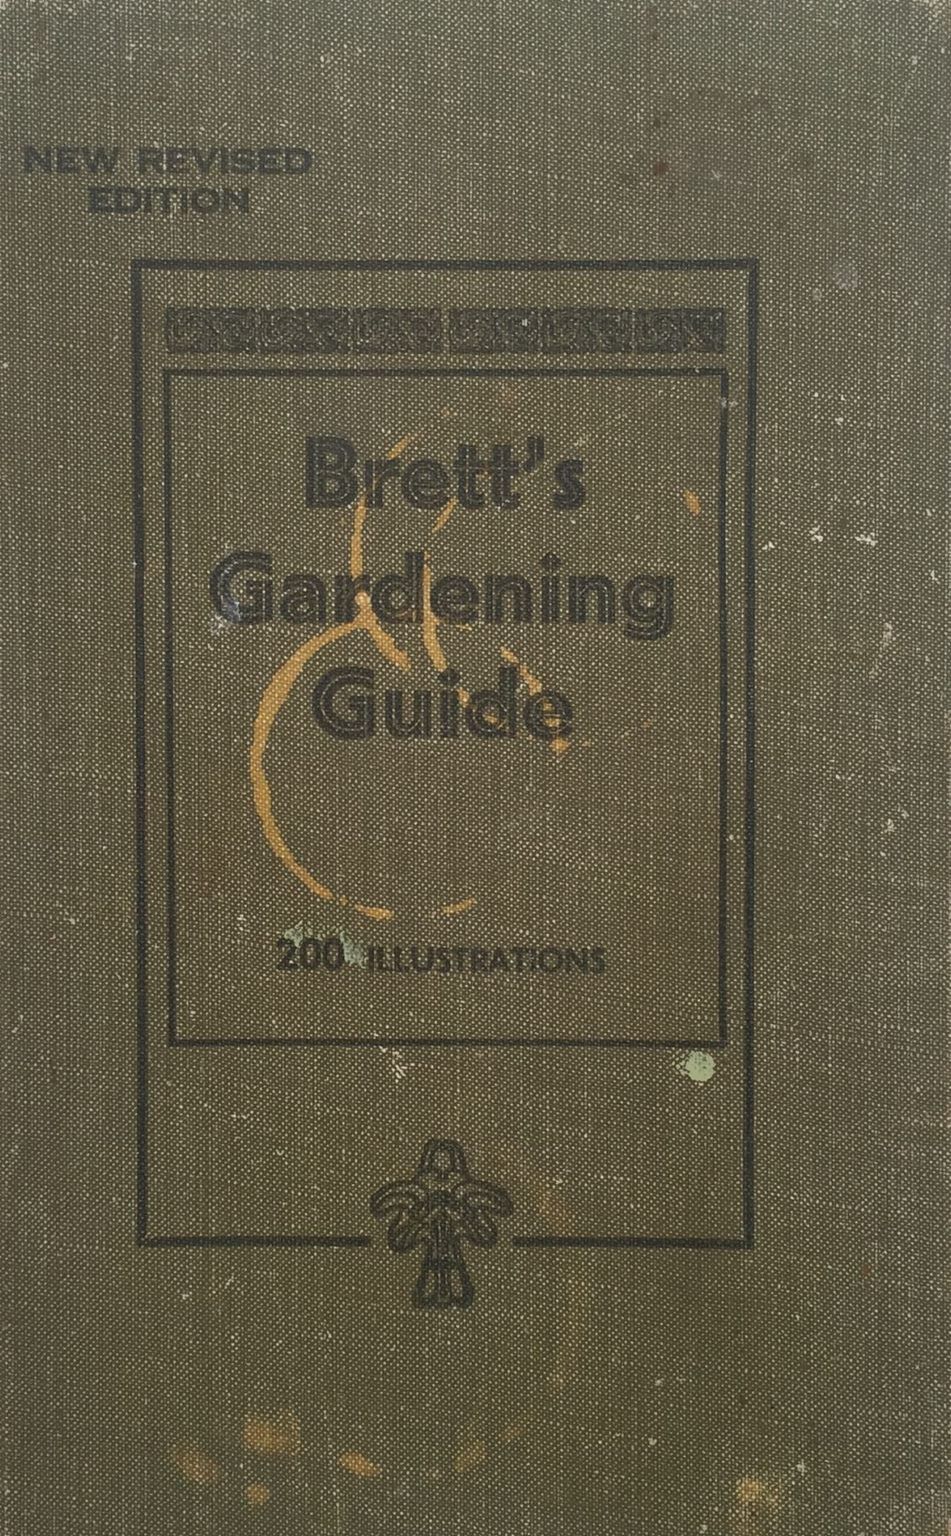 BRETT'S GARDENING GUIDE 1939: Revised Edition